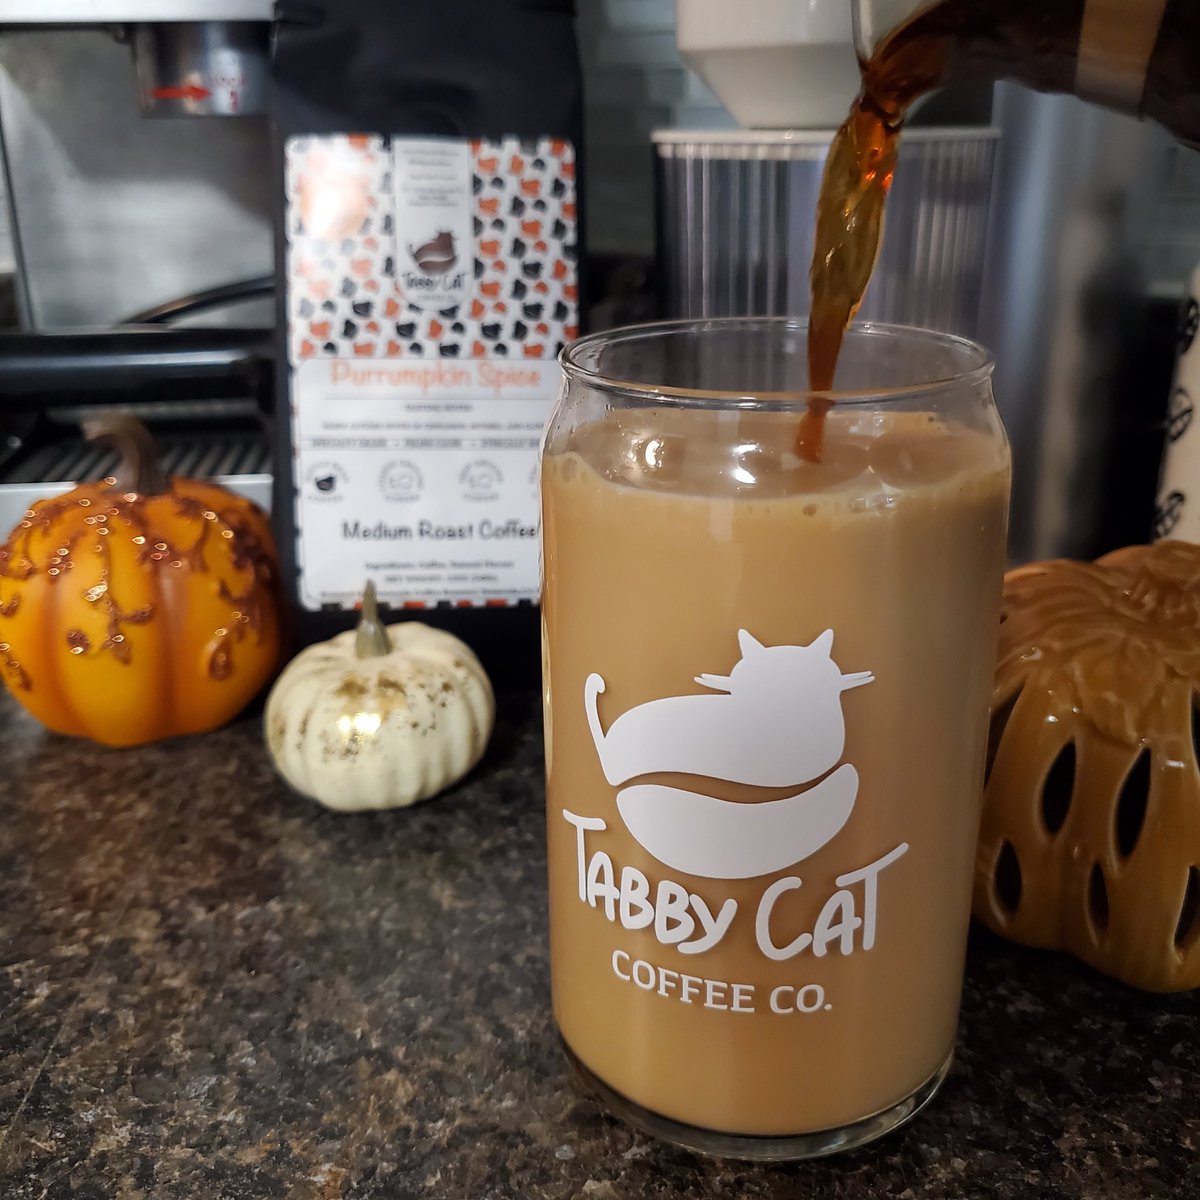 🎃 #pumpkinspice season is here! 

#pumpkinspicecoffee #AutumnIsComing #Coffee #tabbycatcoffee #tabbycatcoffeeco #catsandcoffee #CatsOfTwitter #ilovecats #felinemedicine #veterinarians #vettechs #CatsAreFamily #felinehealth #CoffeeTime